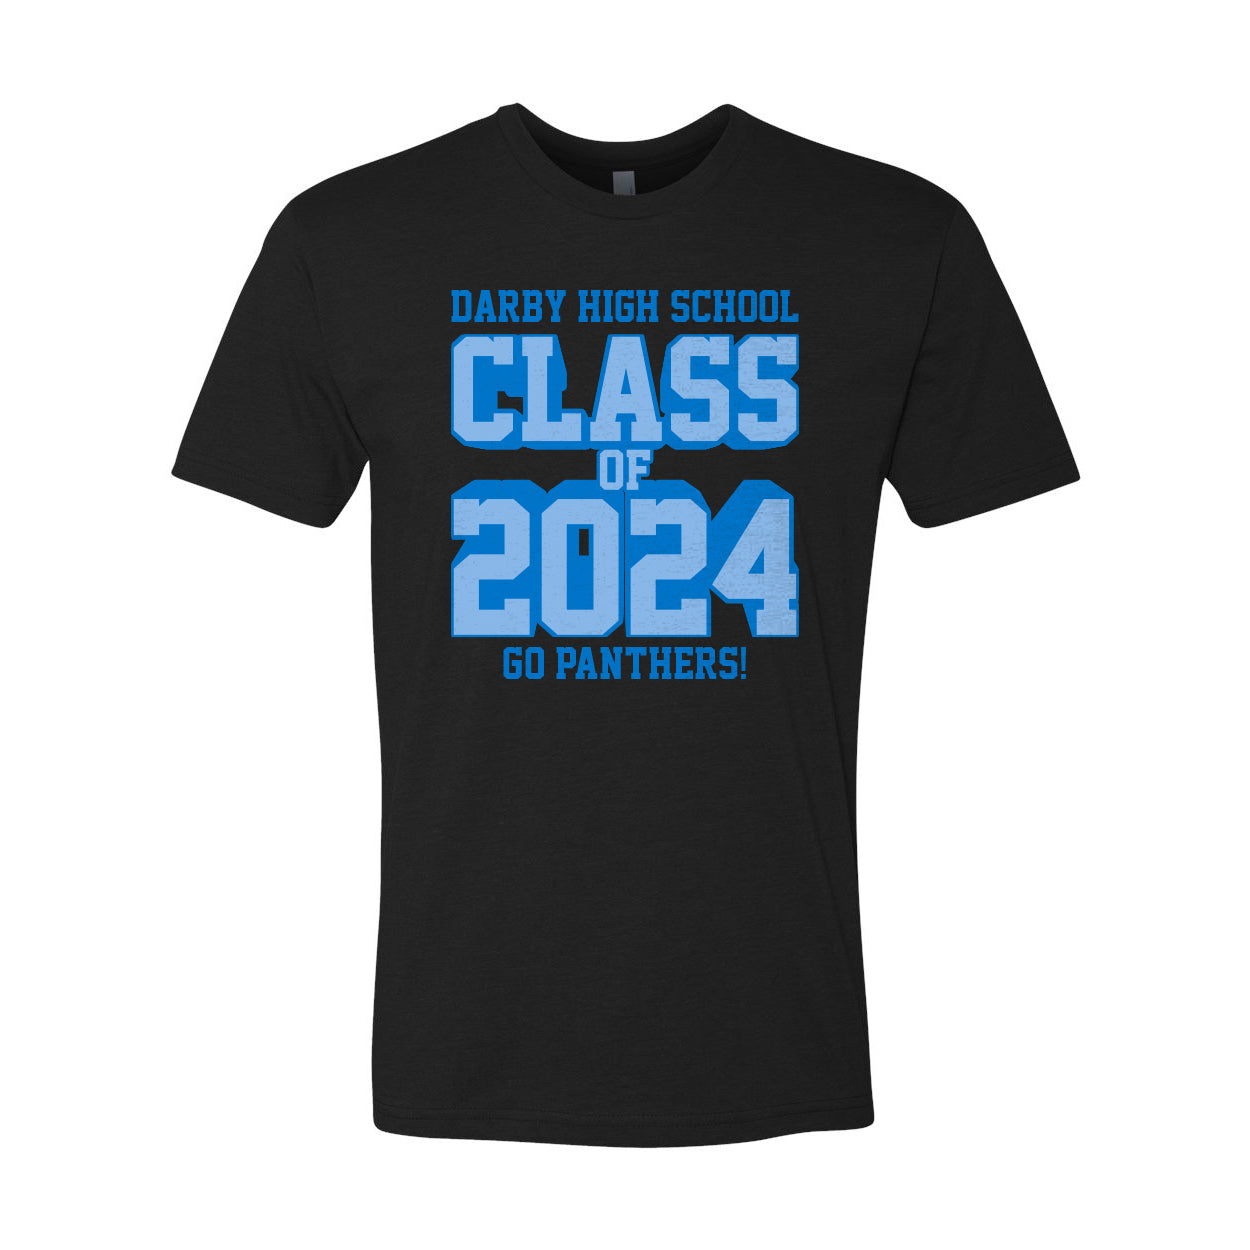 Class of 2024 Tee - Black